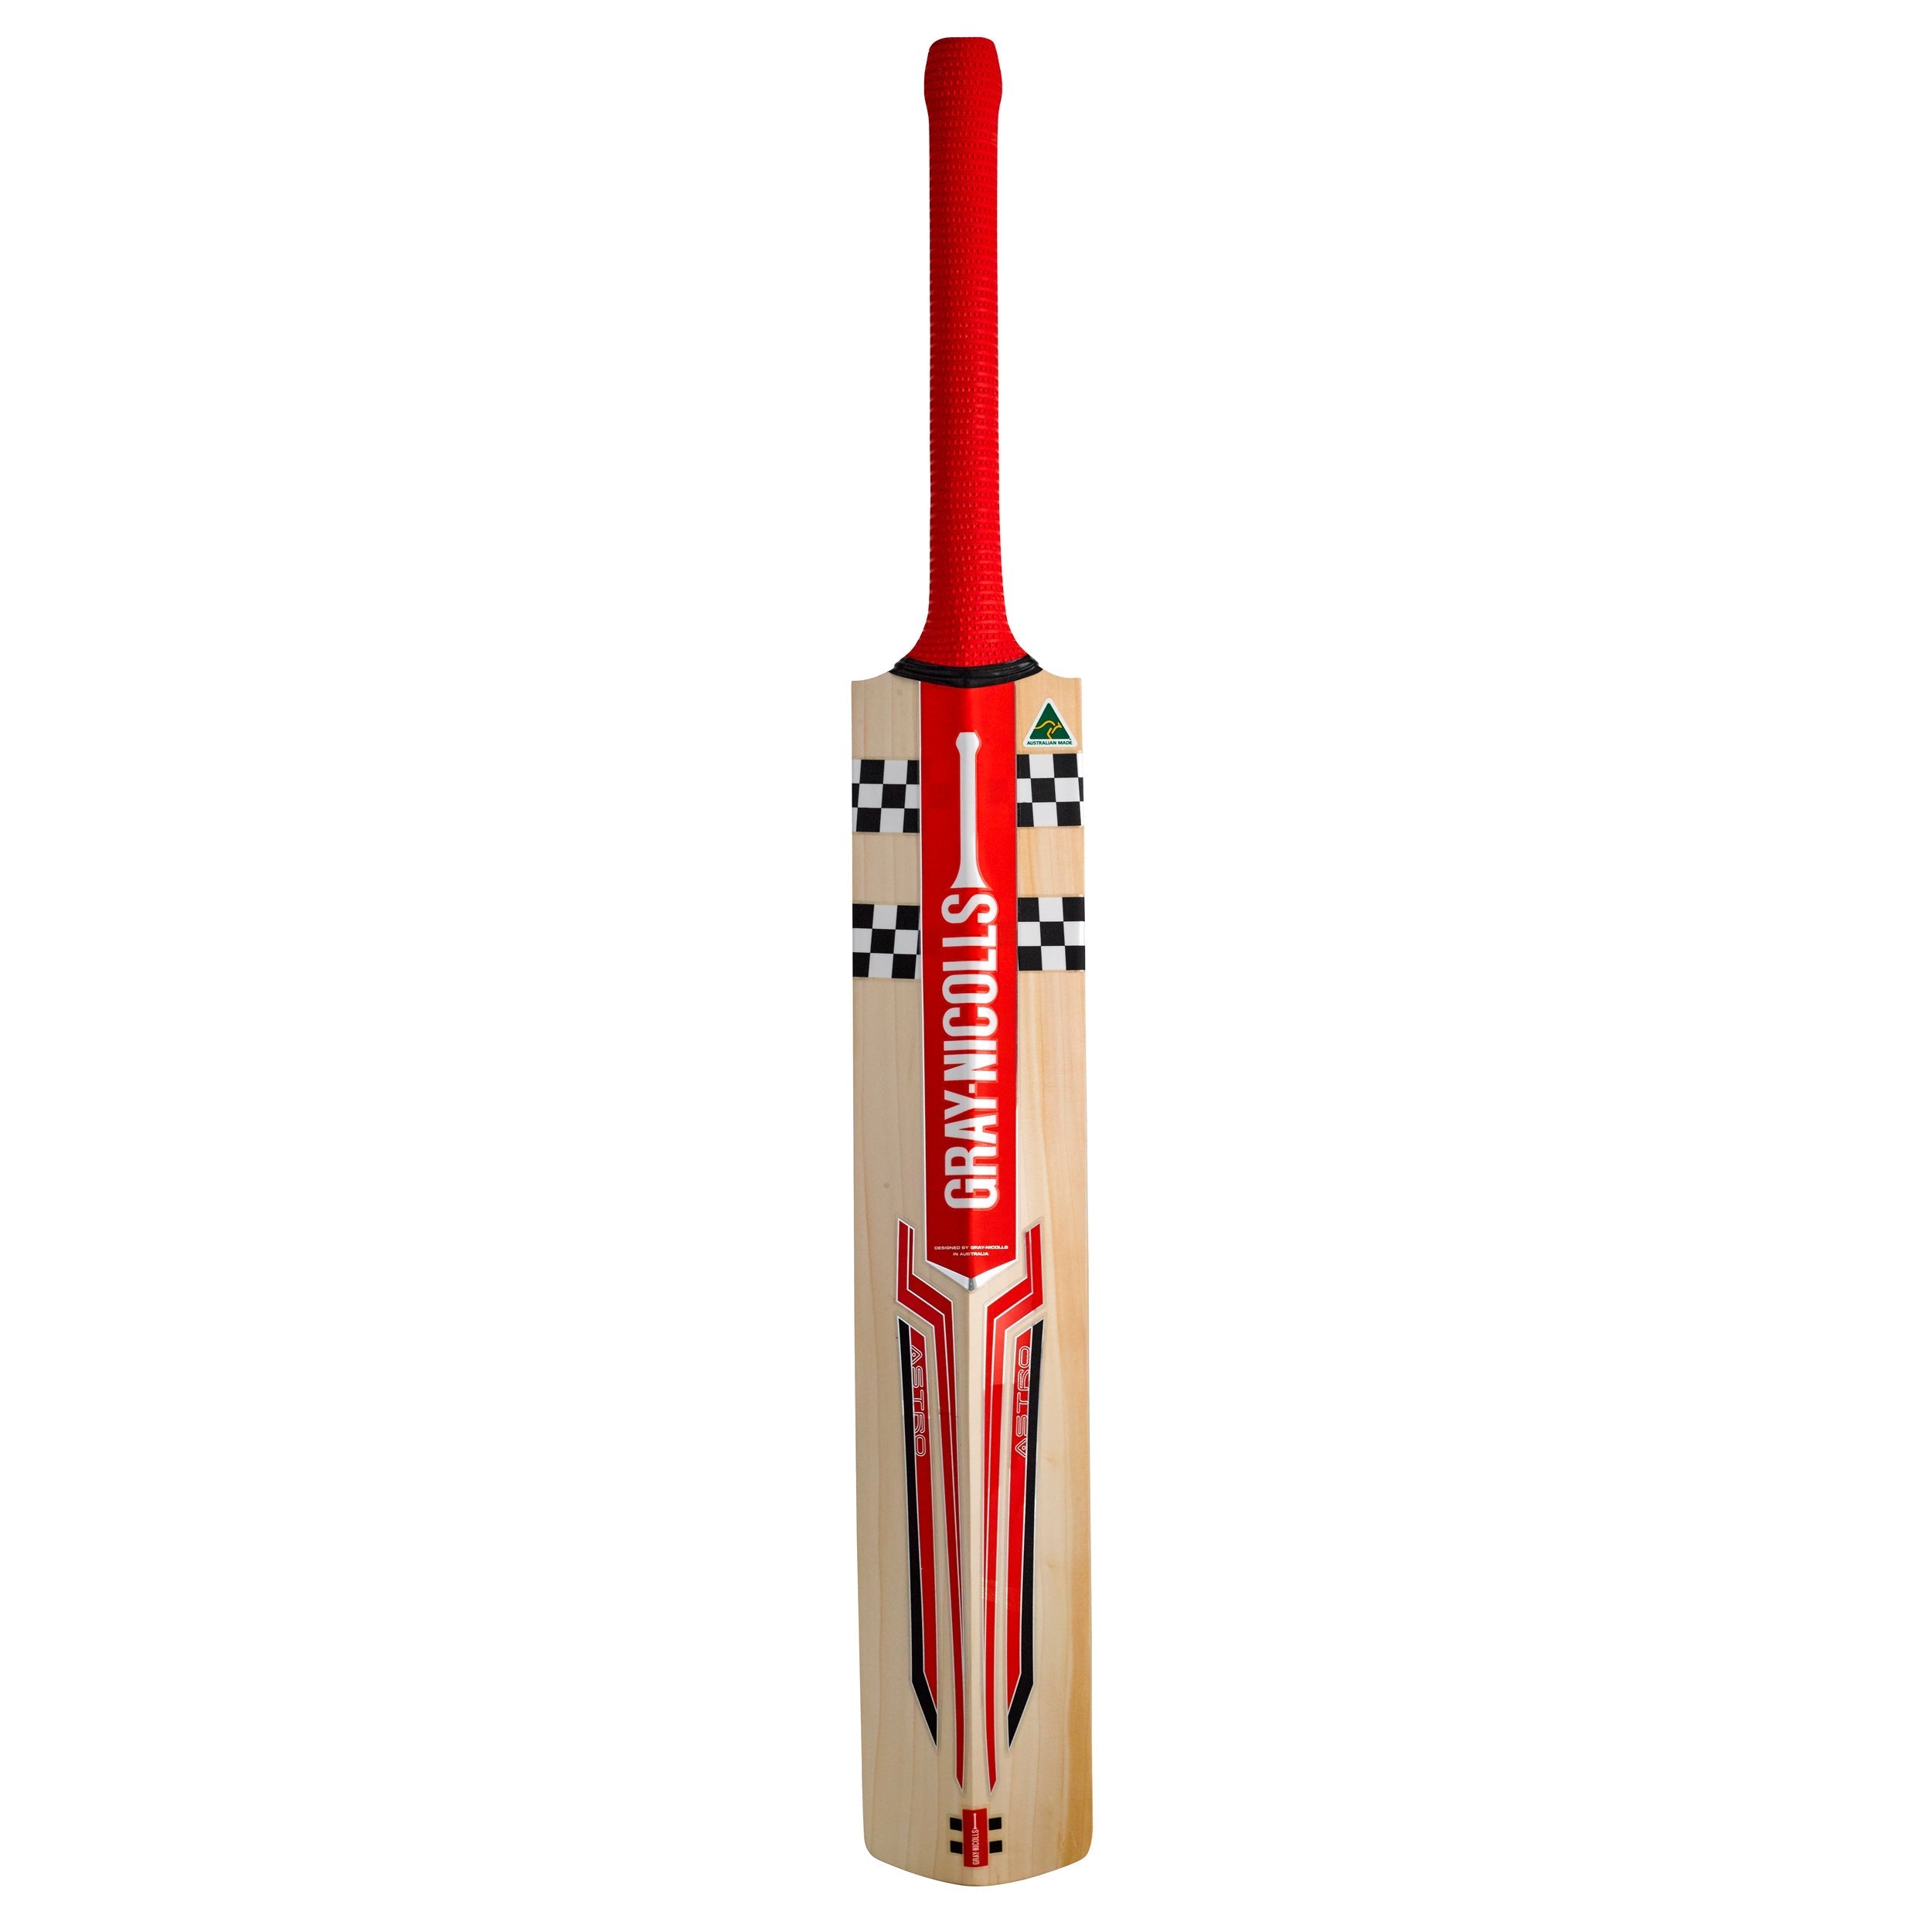 Gray-Nicolls Astro 950 PLAY NOW Senior Cricket Bat